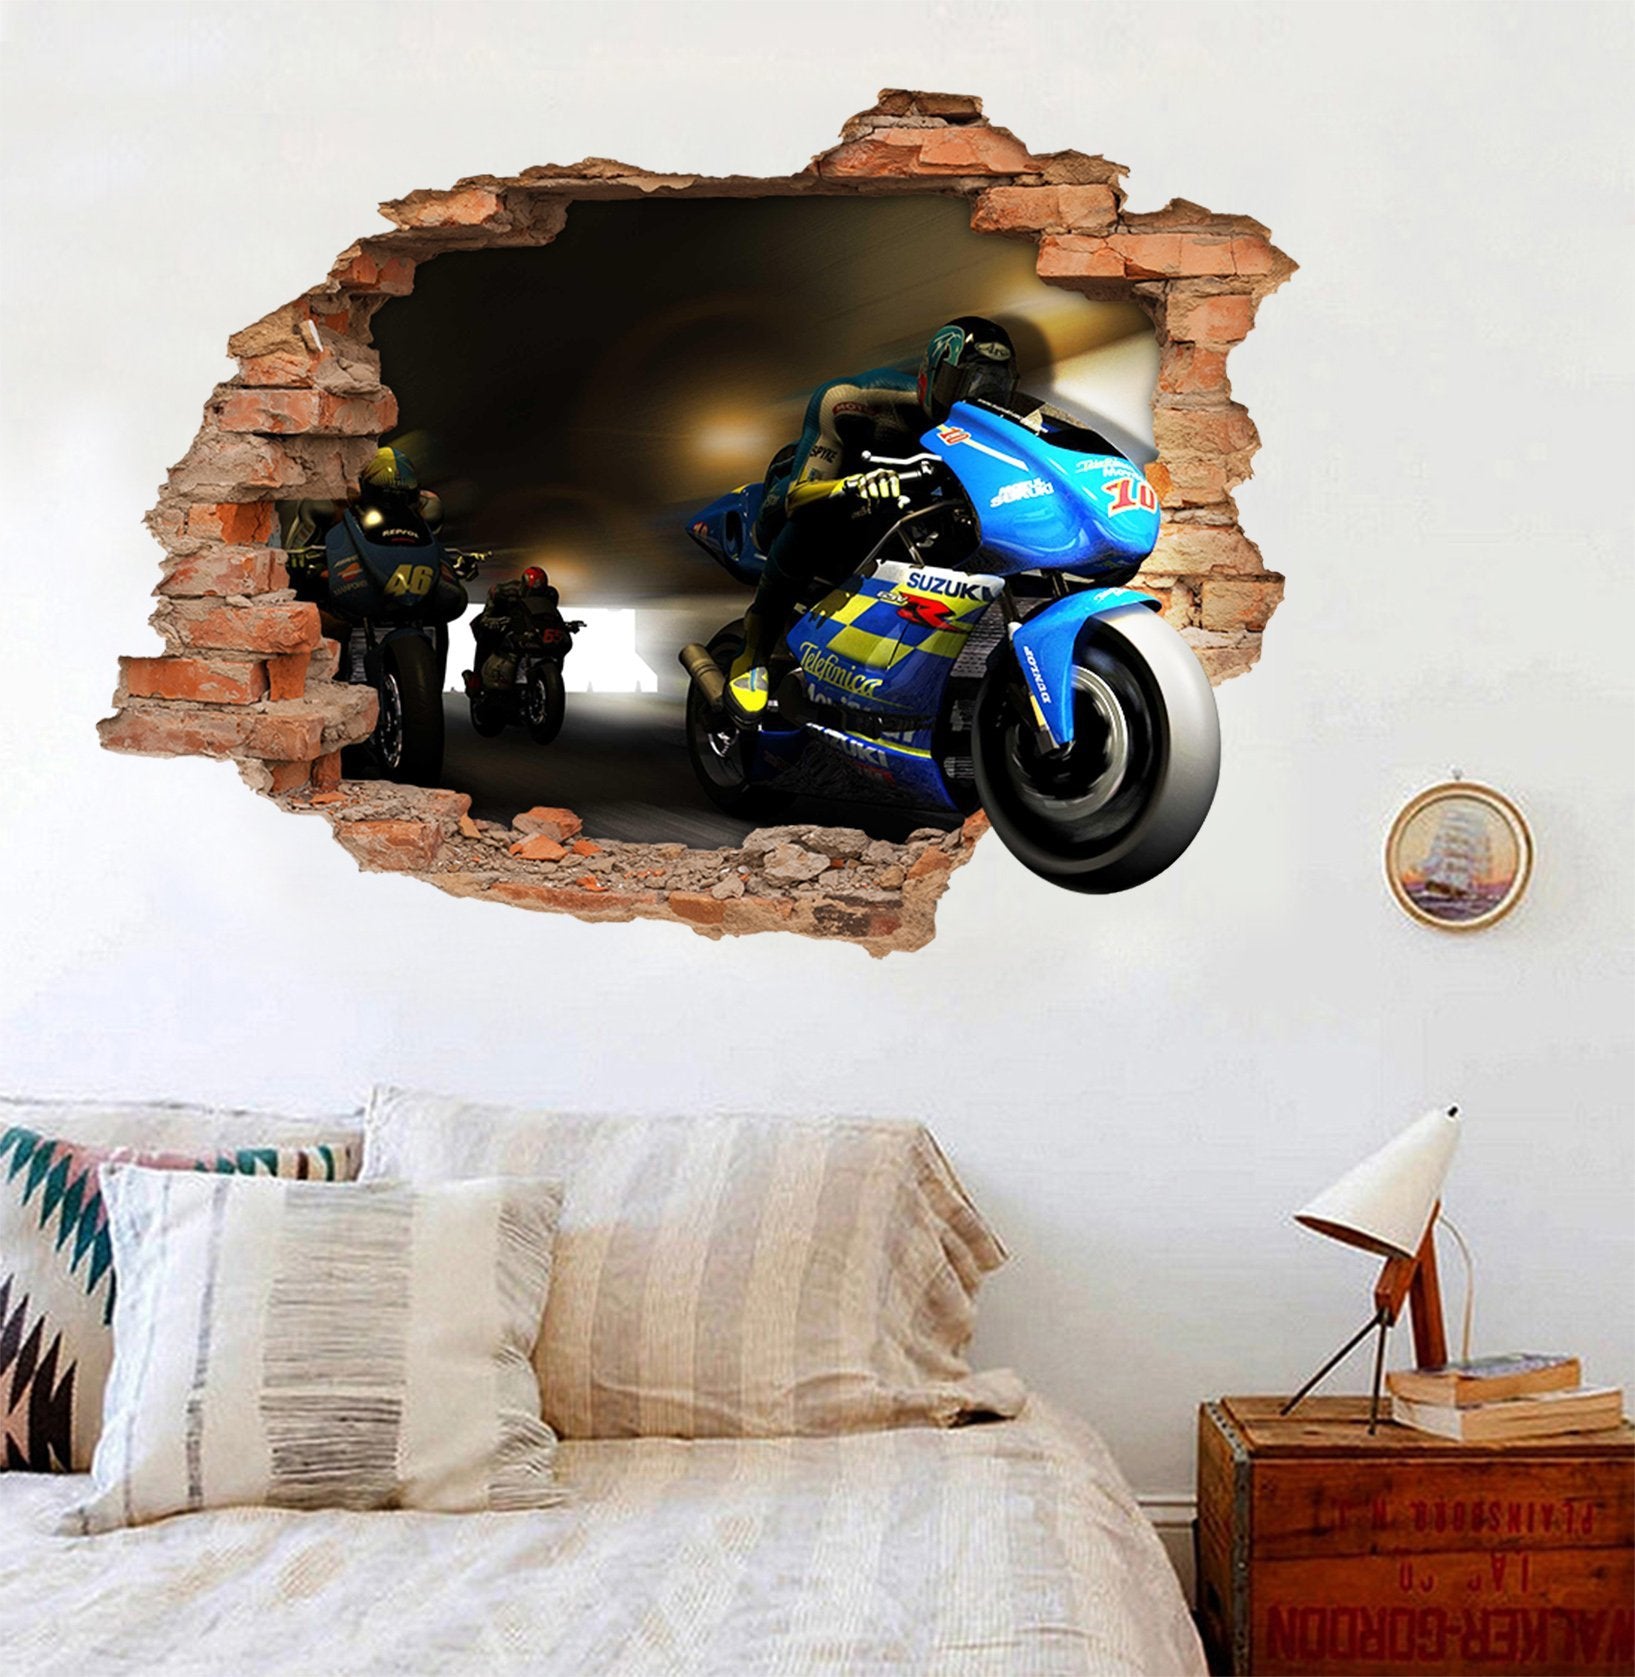 3D Motorcycle Team 14 Broken Wall Murals Wallpaper AJ Wallpaper 